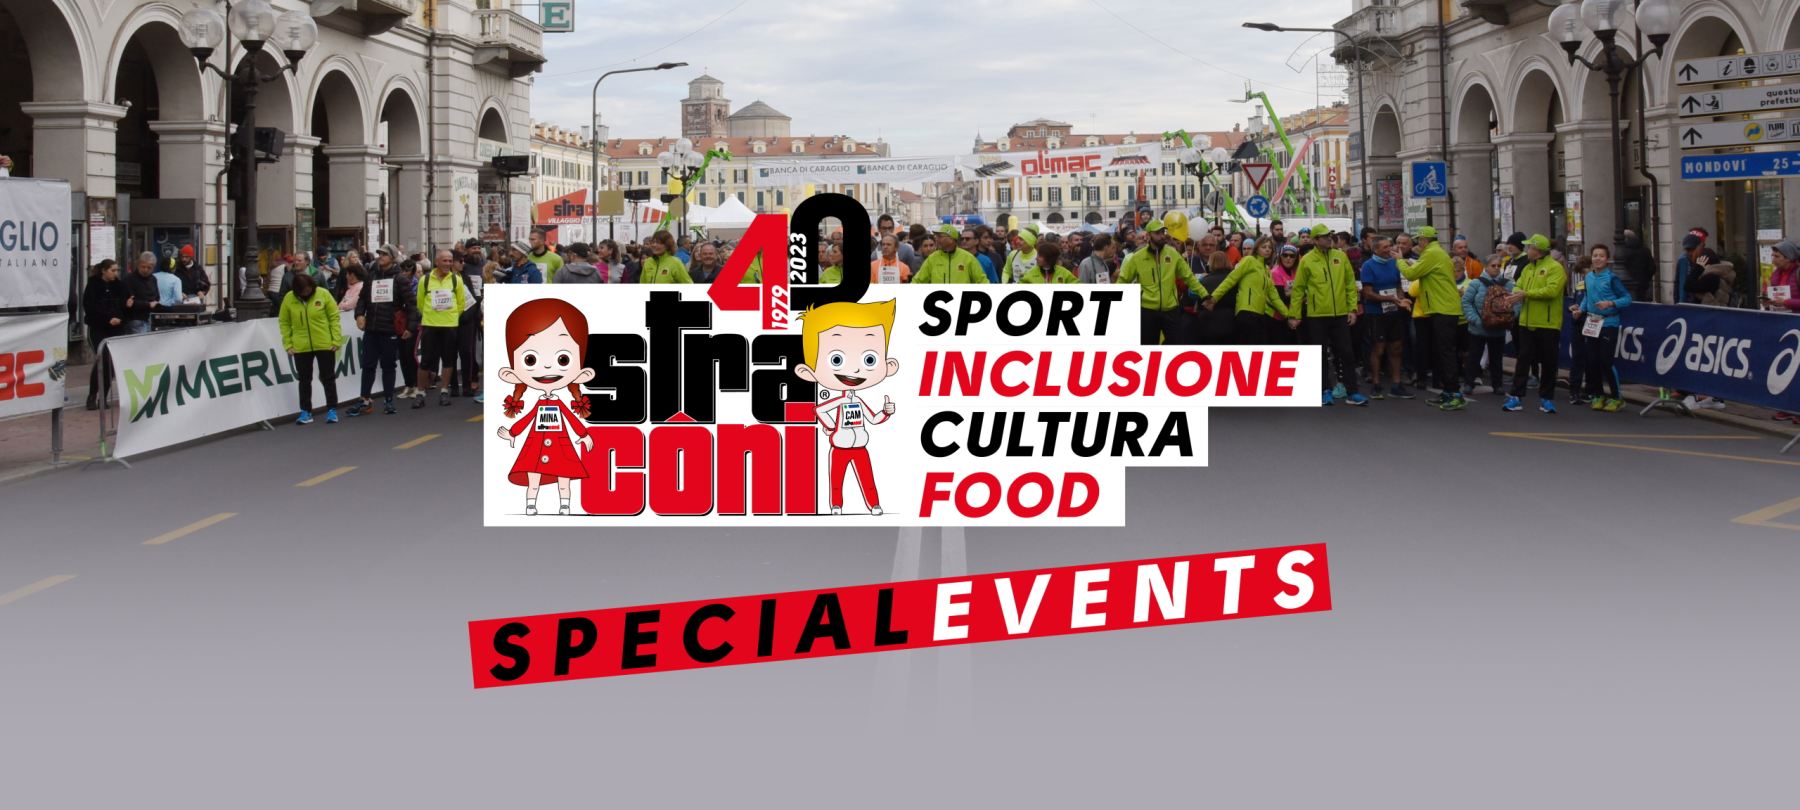 Stracôni Special Events | Sport, Inclusione, Cultura, Food